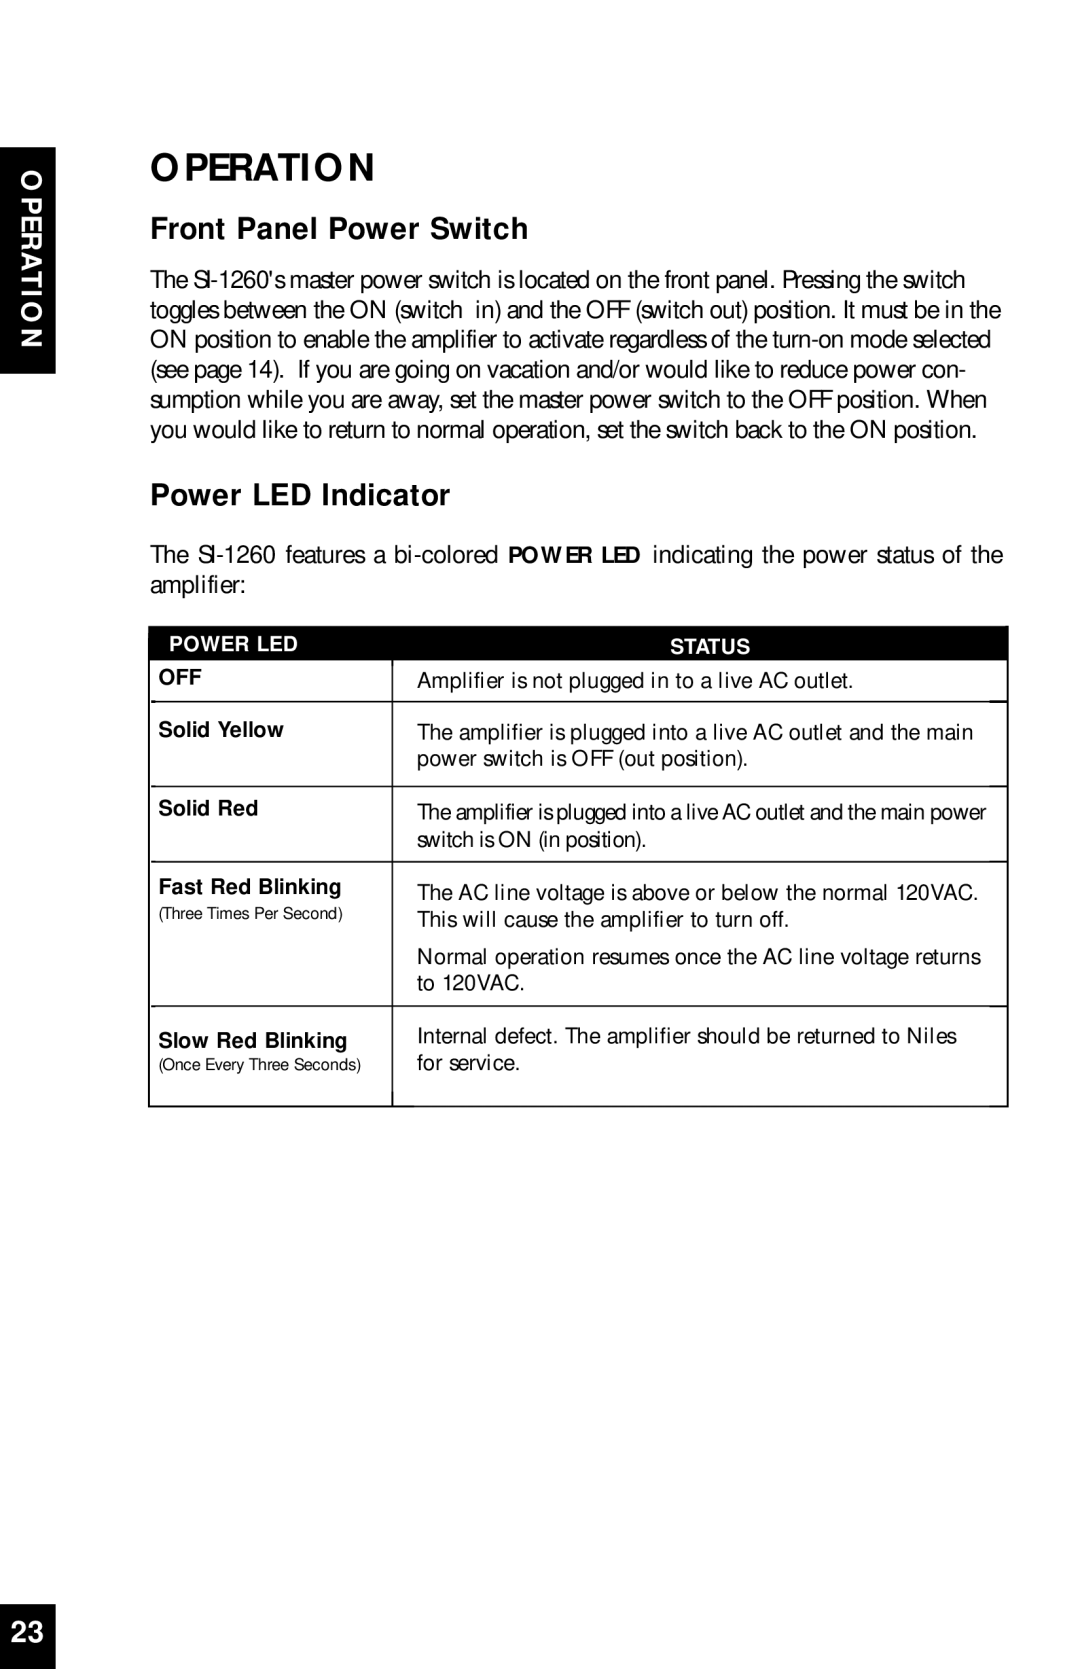 Niles Audio SI-1260 manual Operation, Front Panel Power Switch, Power LED Indicator, Power Led, Status 